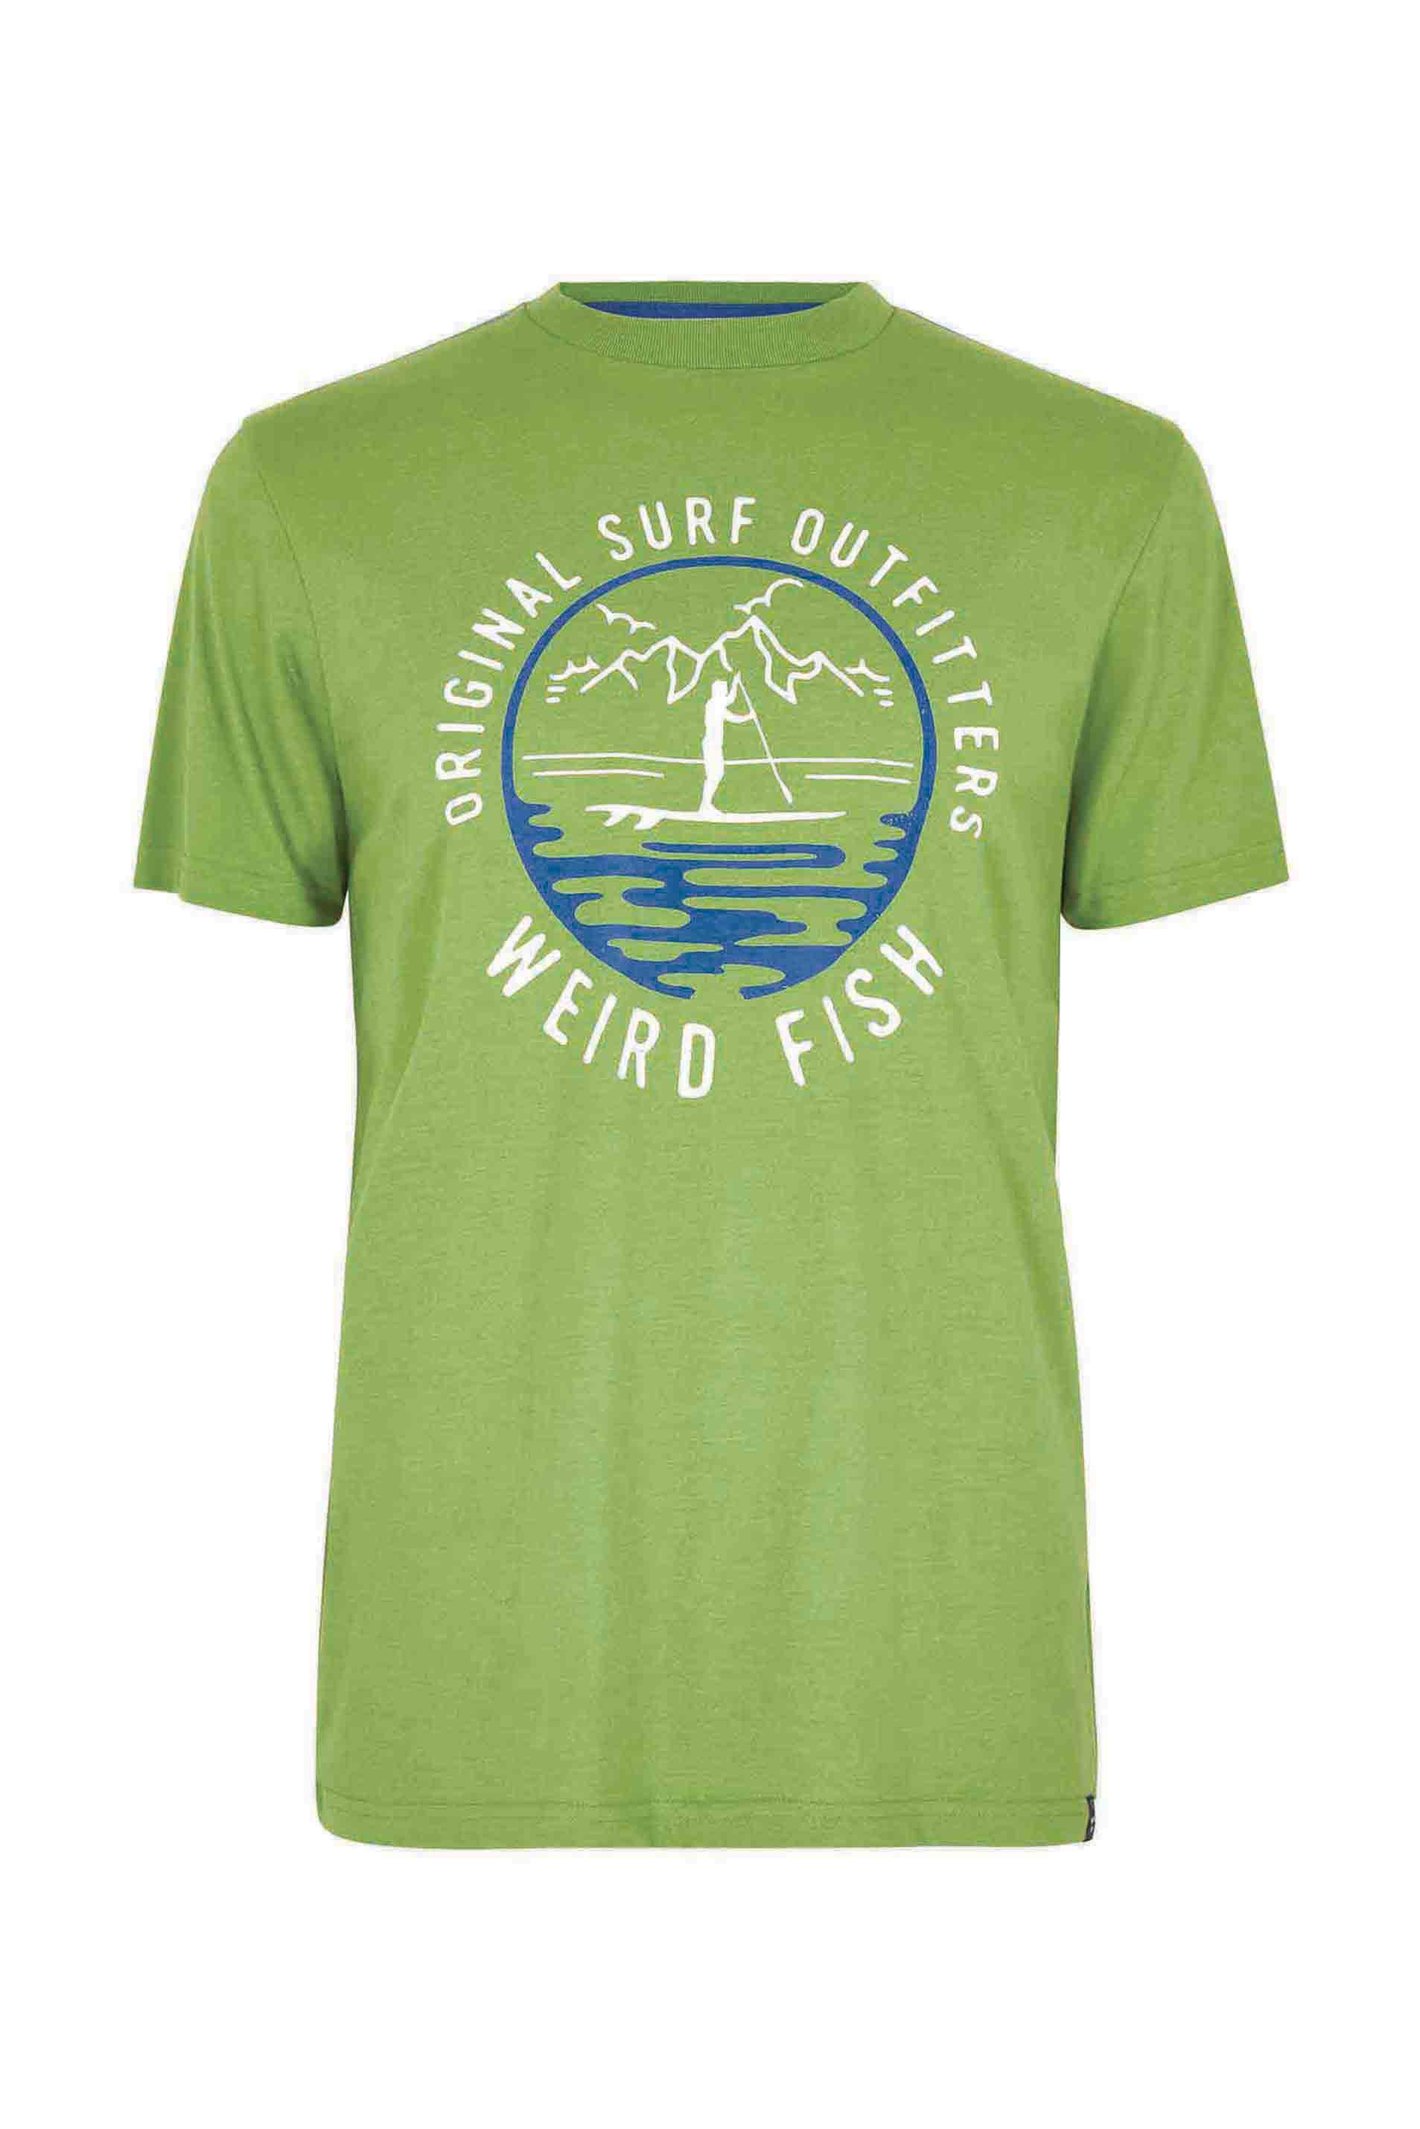 Weird Fish Paddle Eco Graphic T-Shirt Kiwi Size 4XL